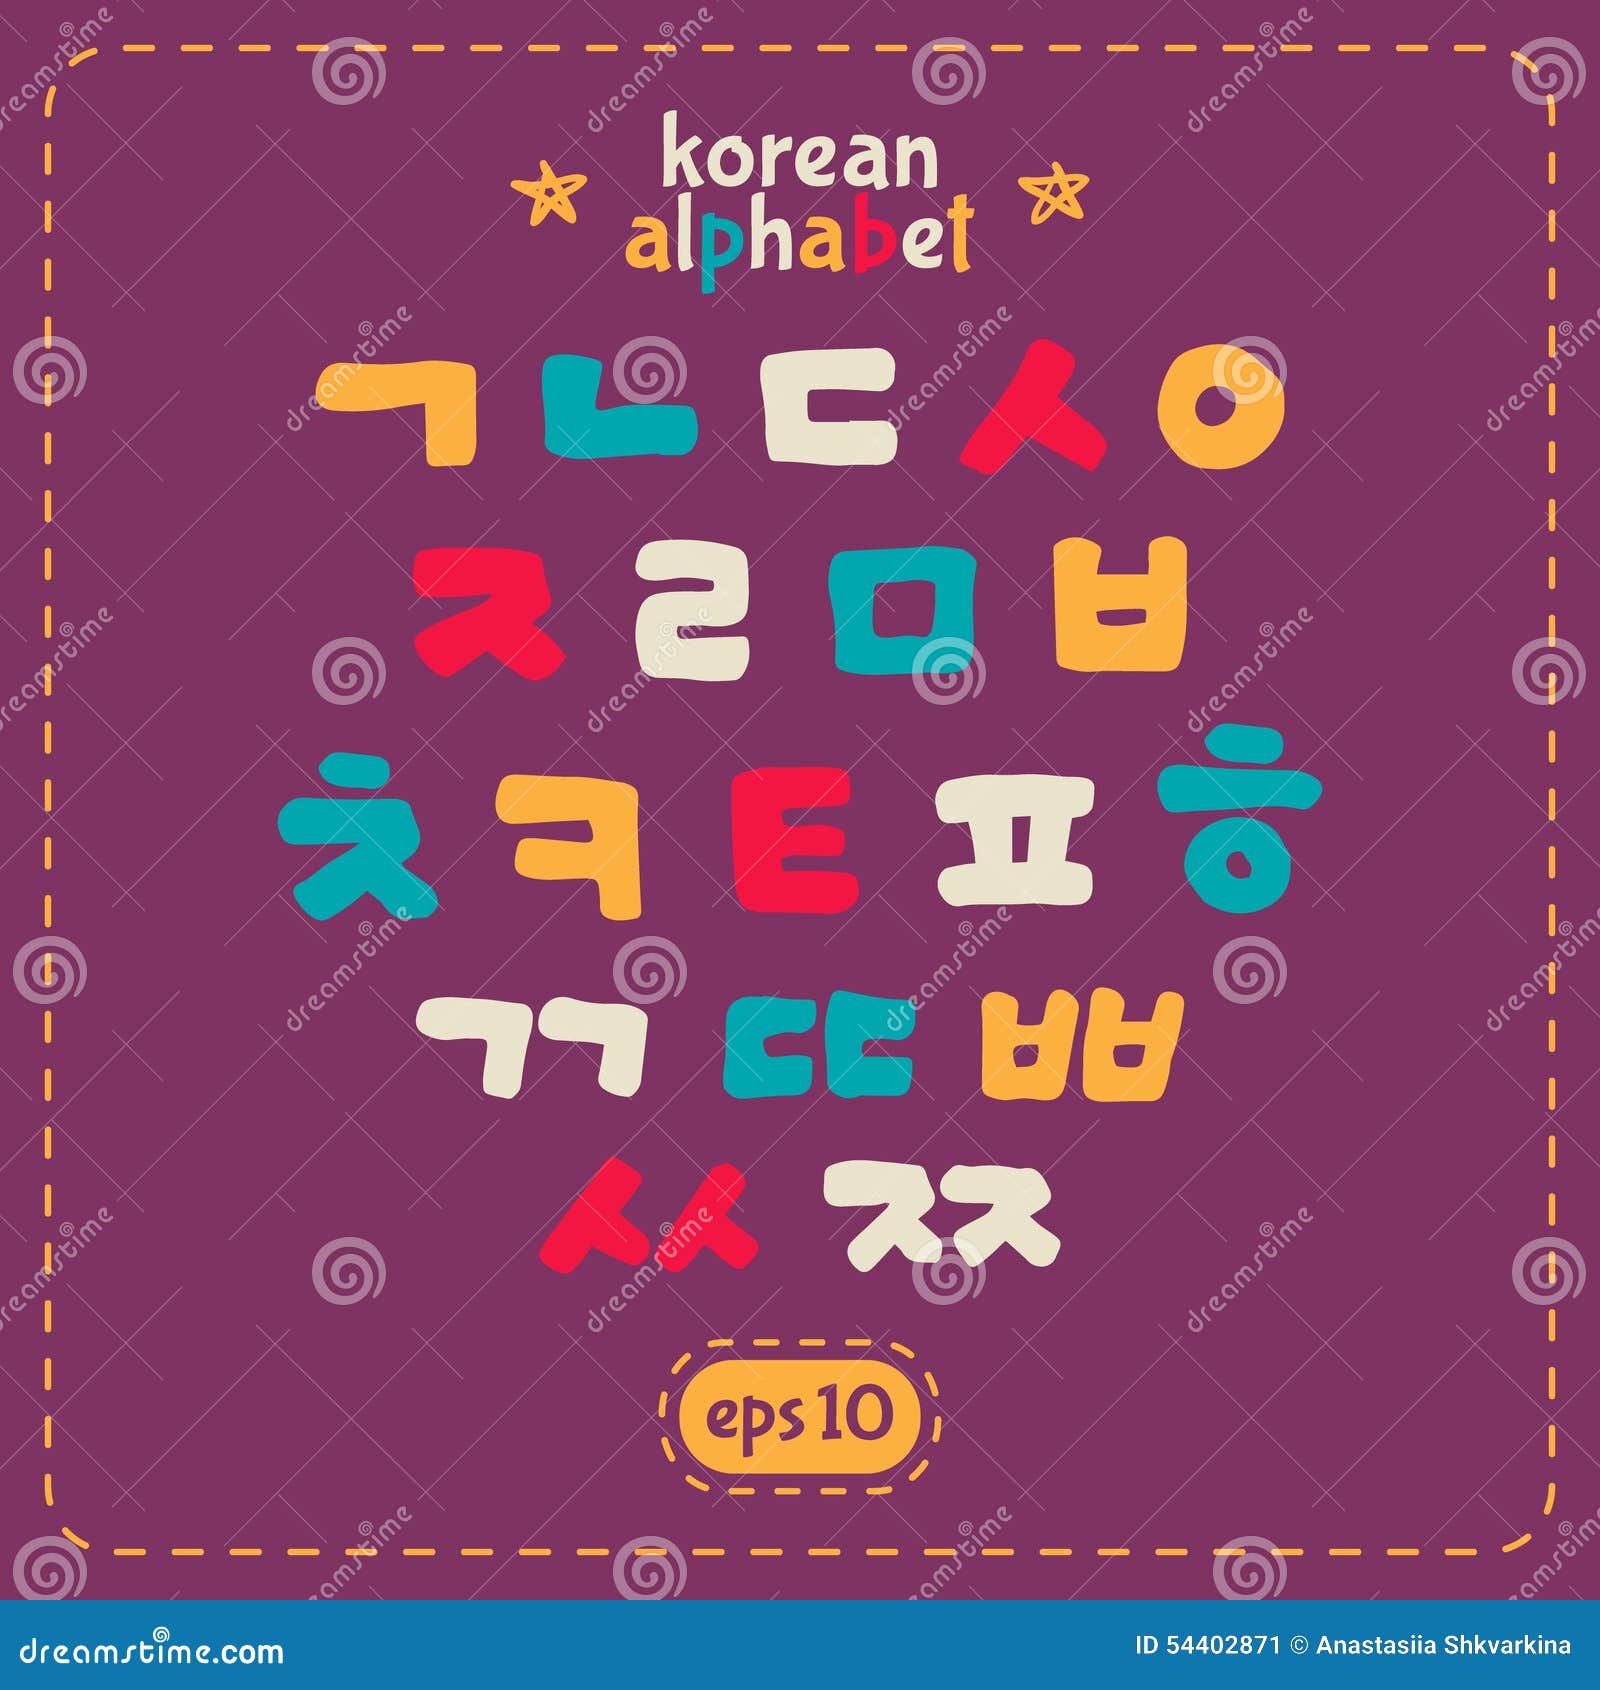 korean alphabet set